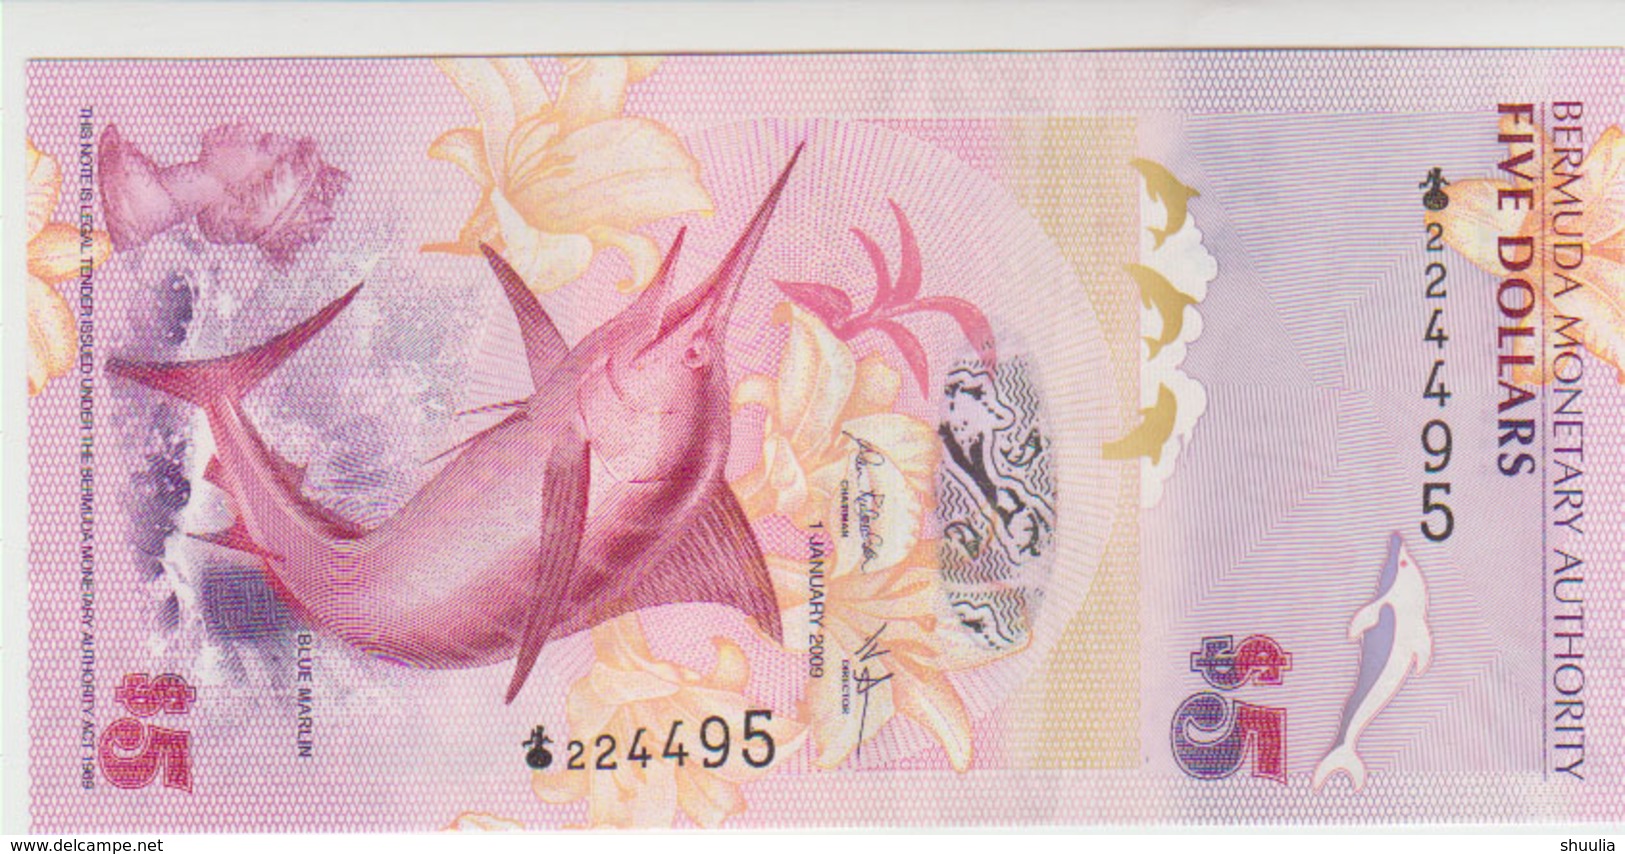 Bermudas 5 Dollars 2009 Pick 58a UNC - Bermudas